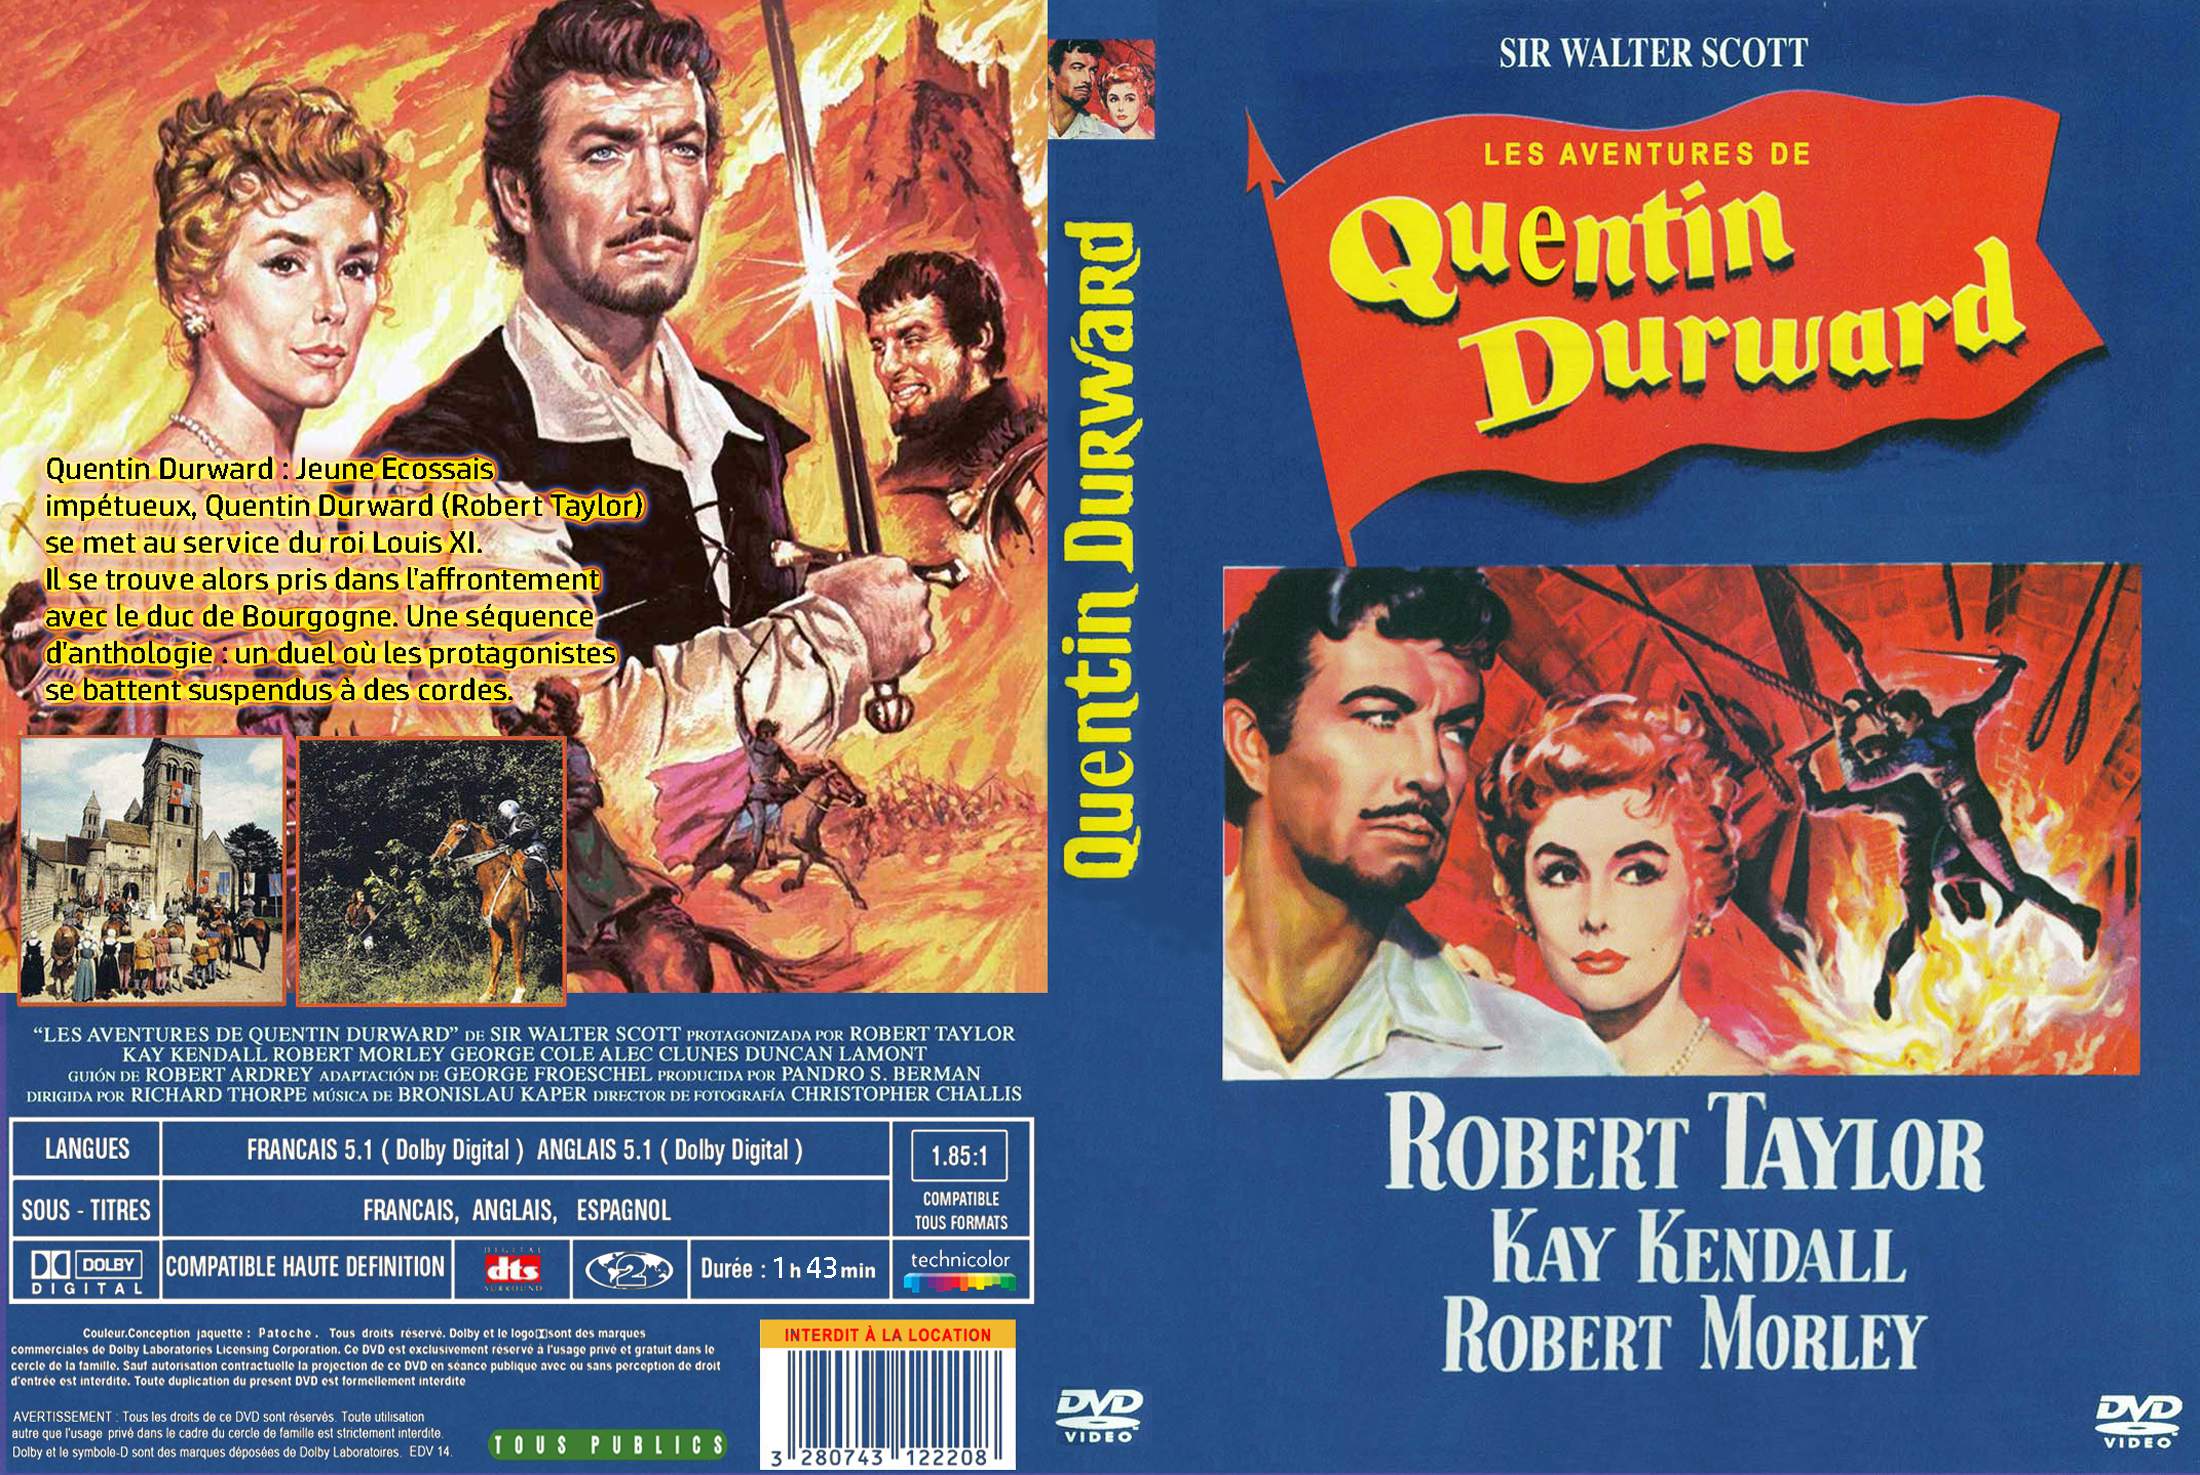 Jaquette DVD Quentin Durward custom